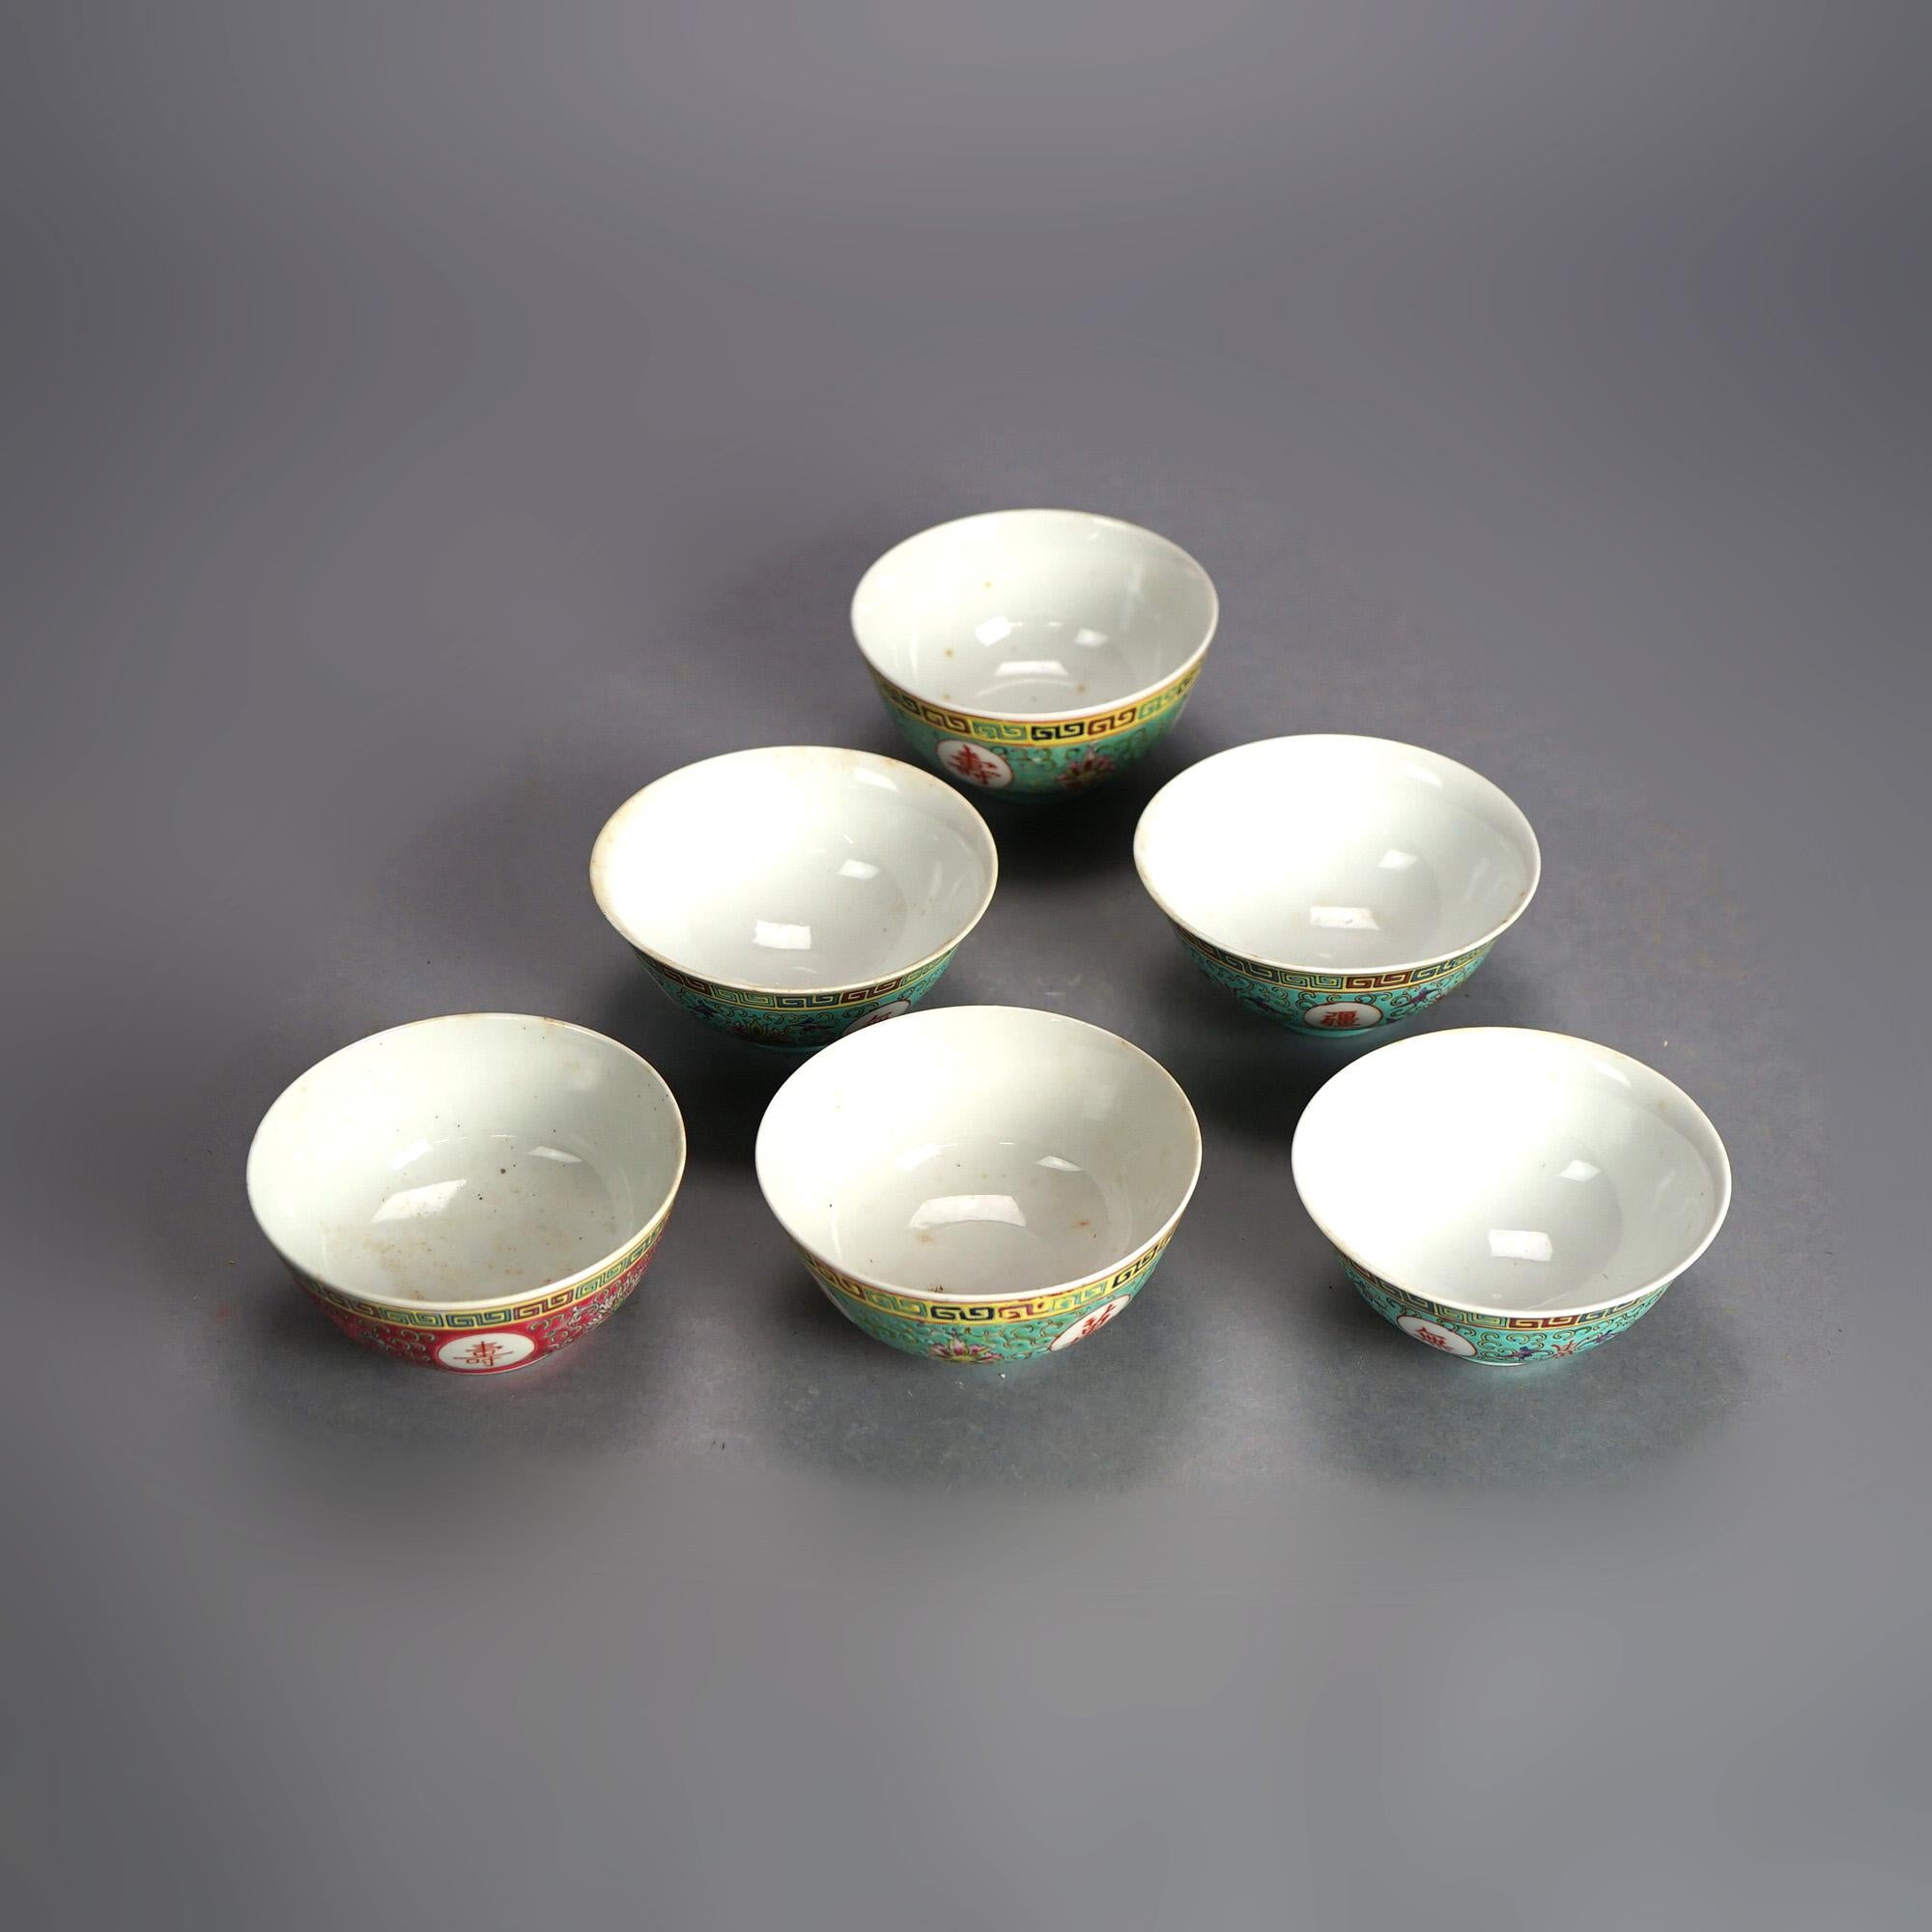 Six Antique Chinese Porcelain Enamel Decorated Rice Bowls C1910

Measures - 2.25